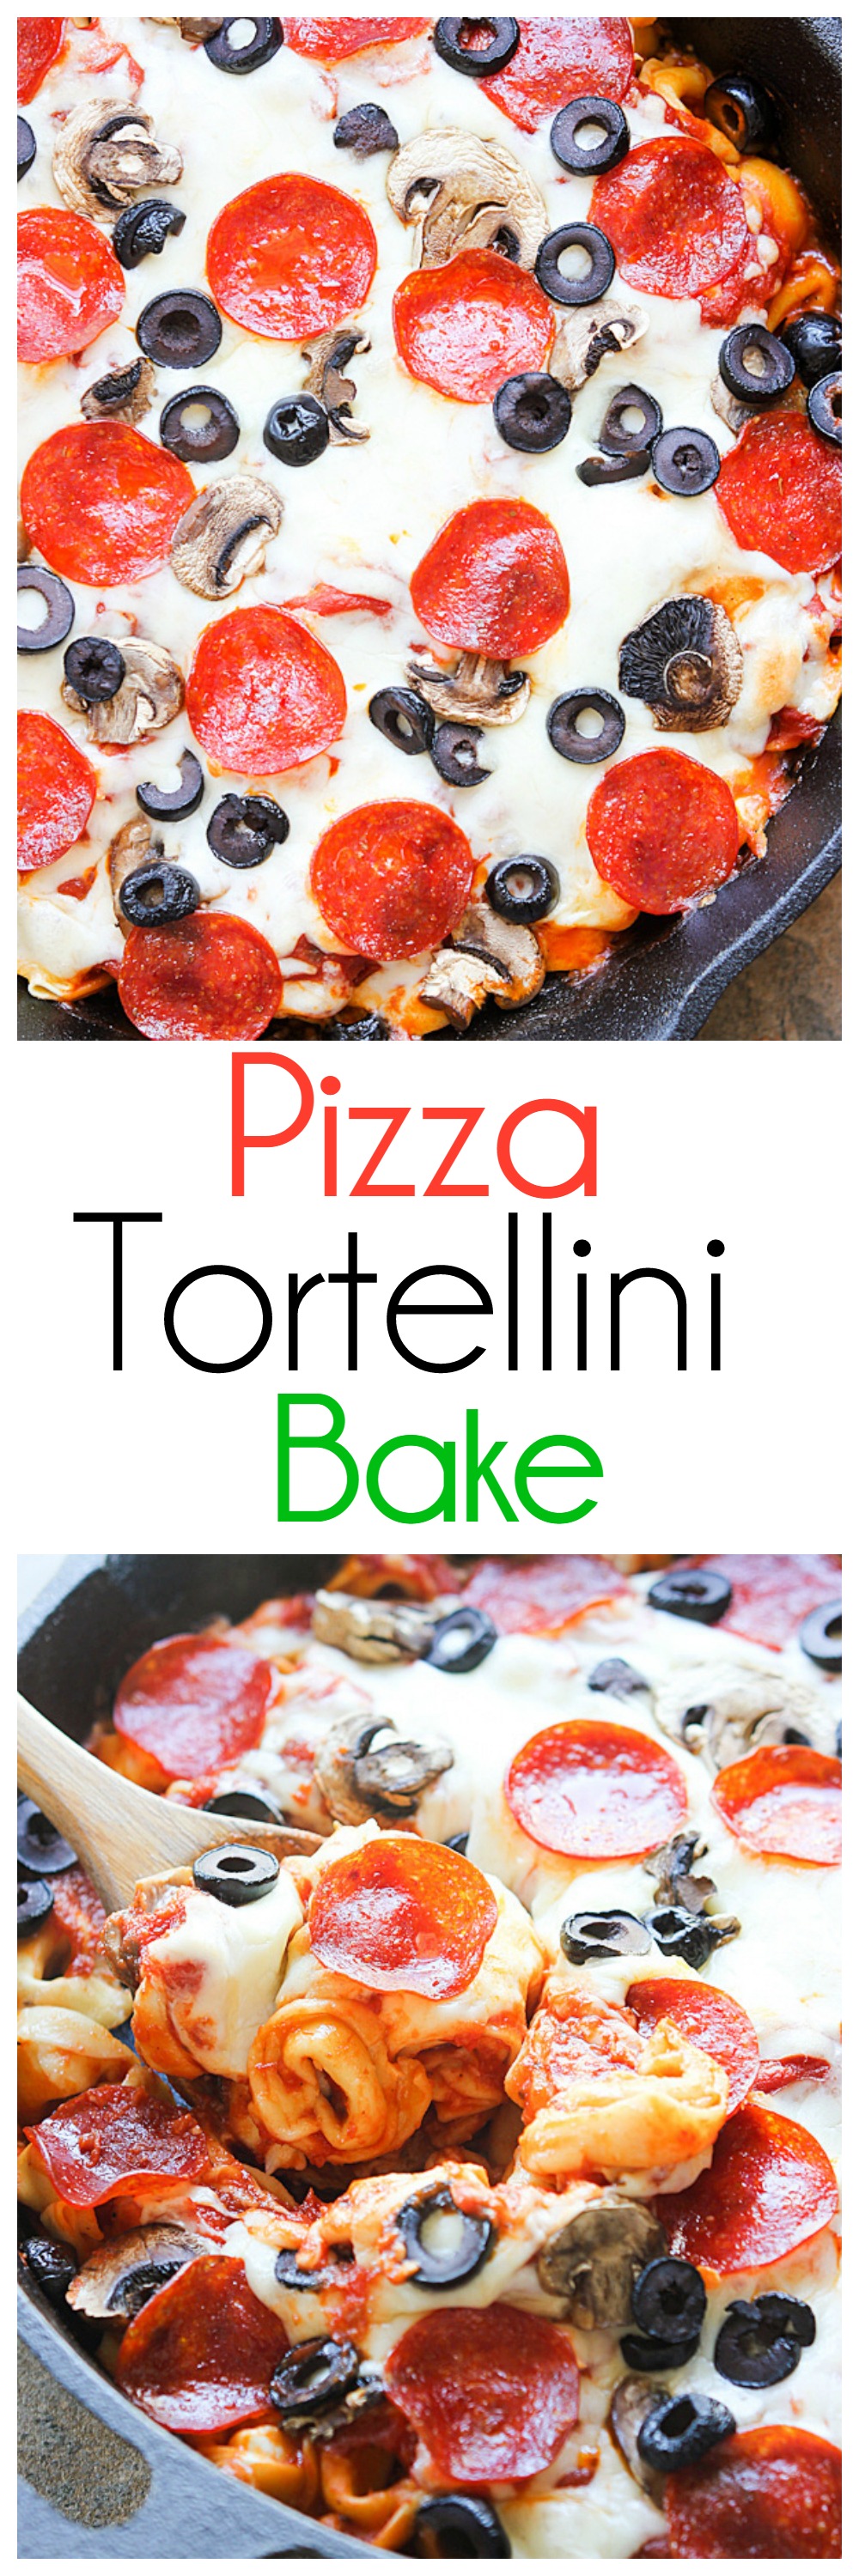 Pizza Tortellini Bake